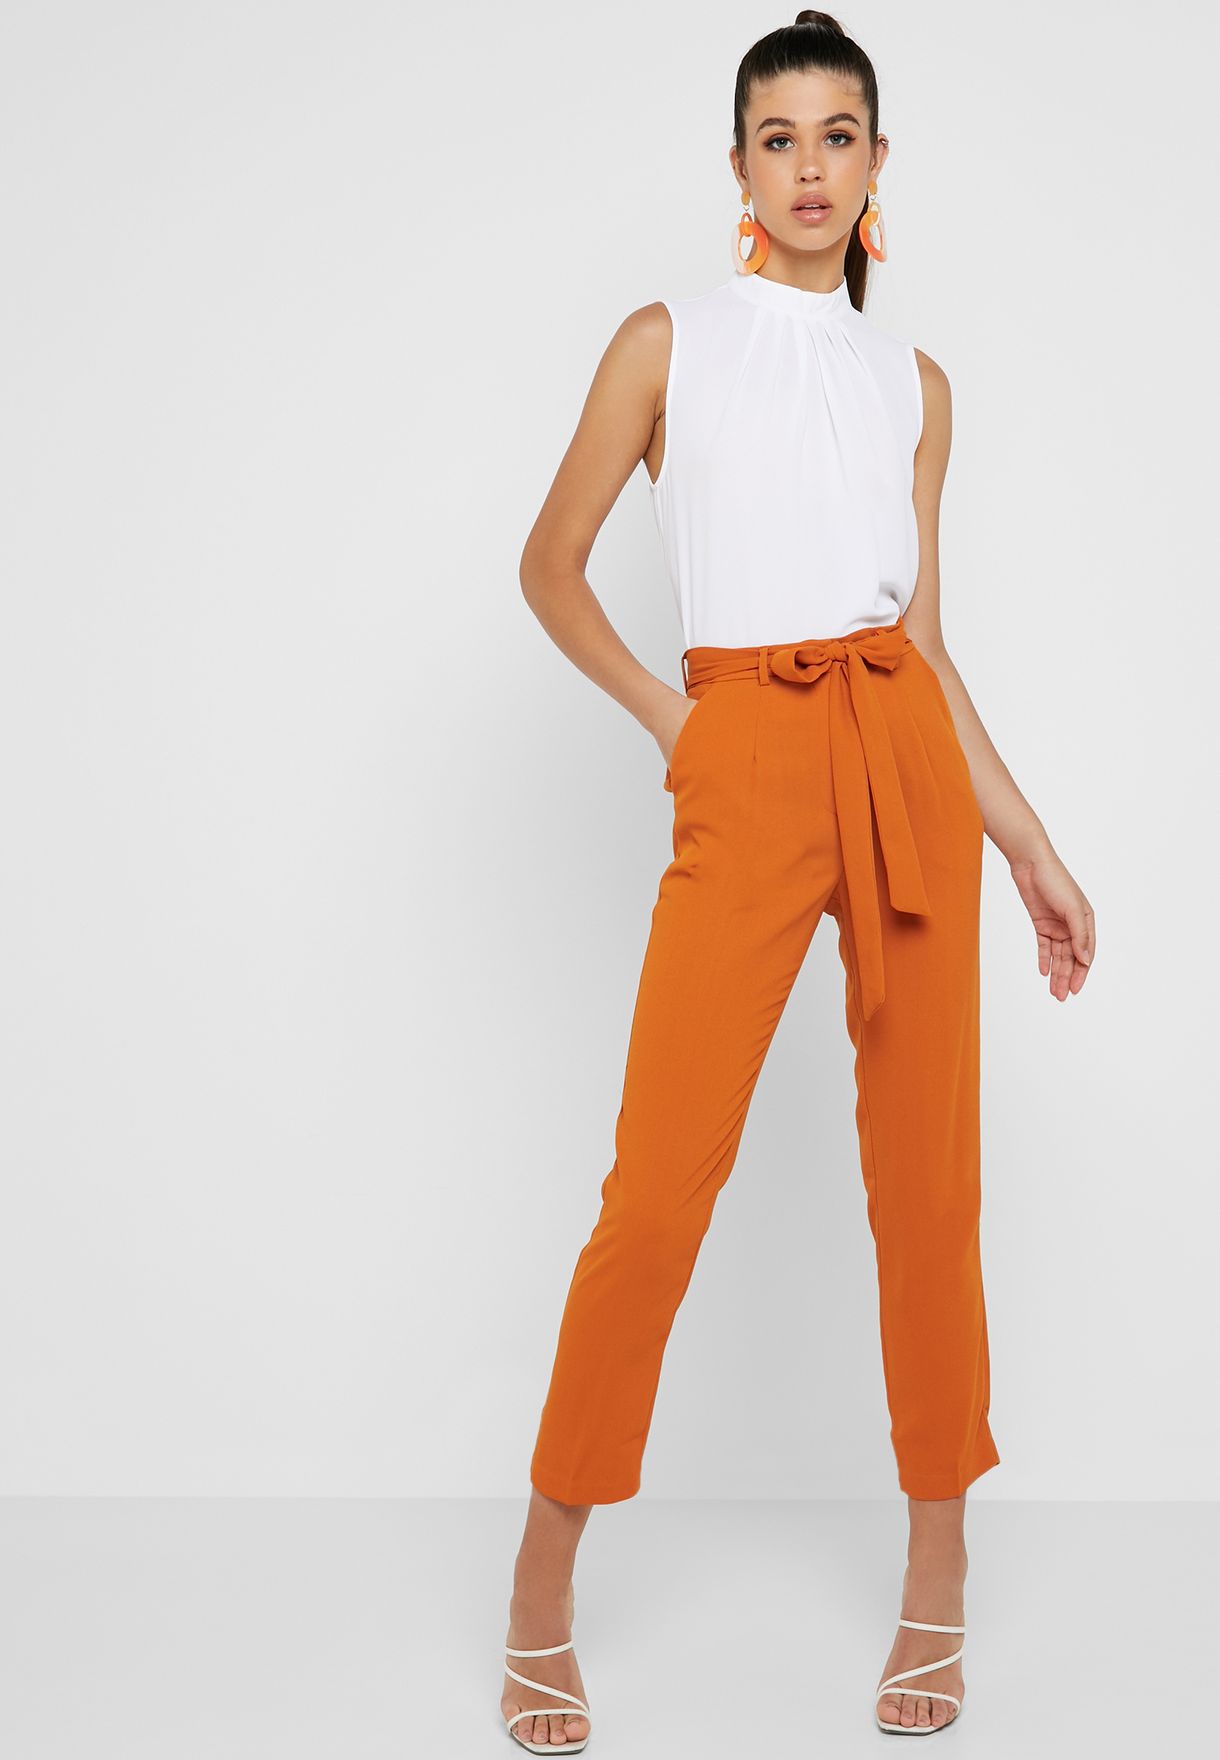 orange high waisted pants